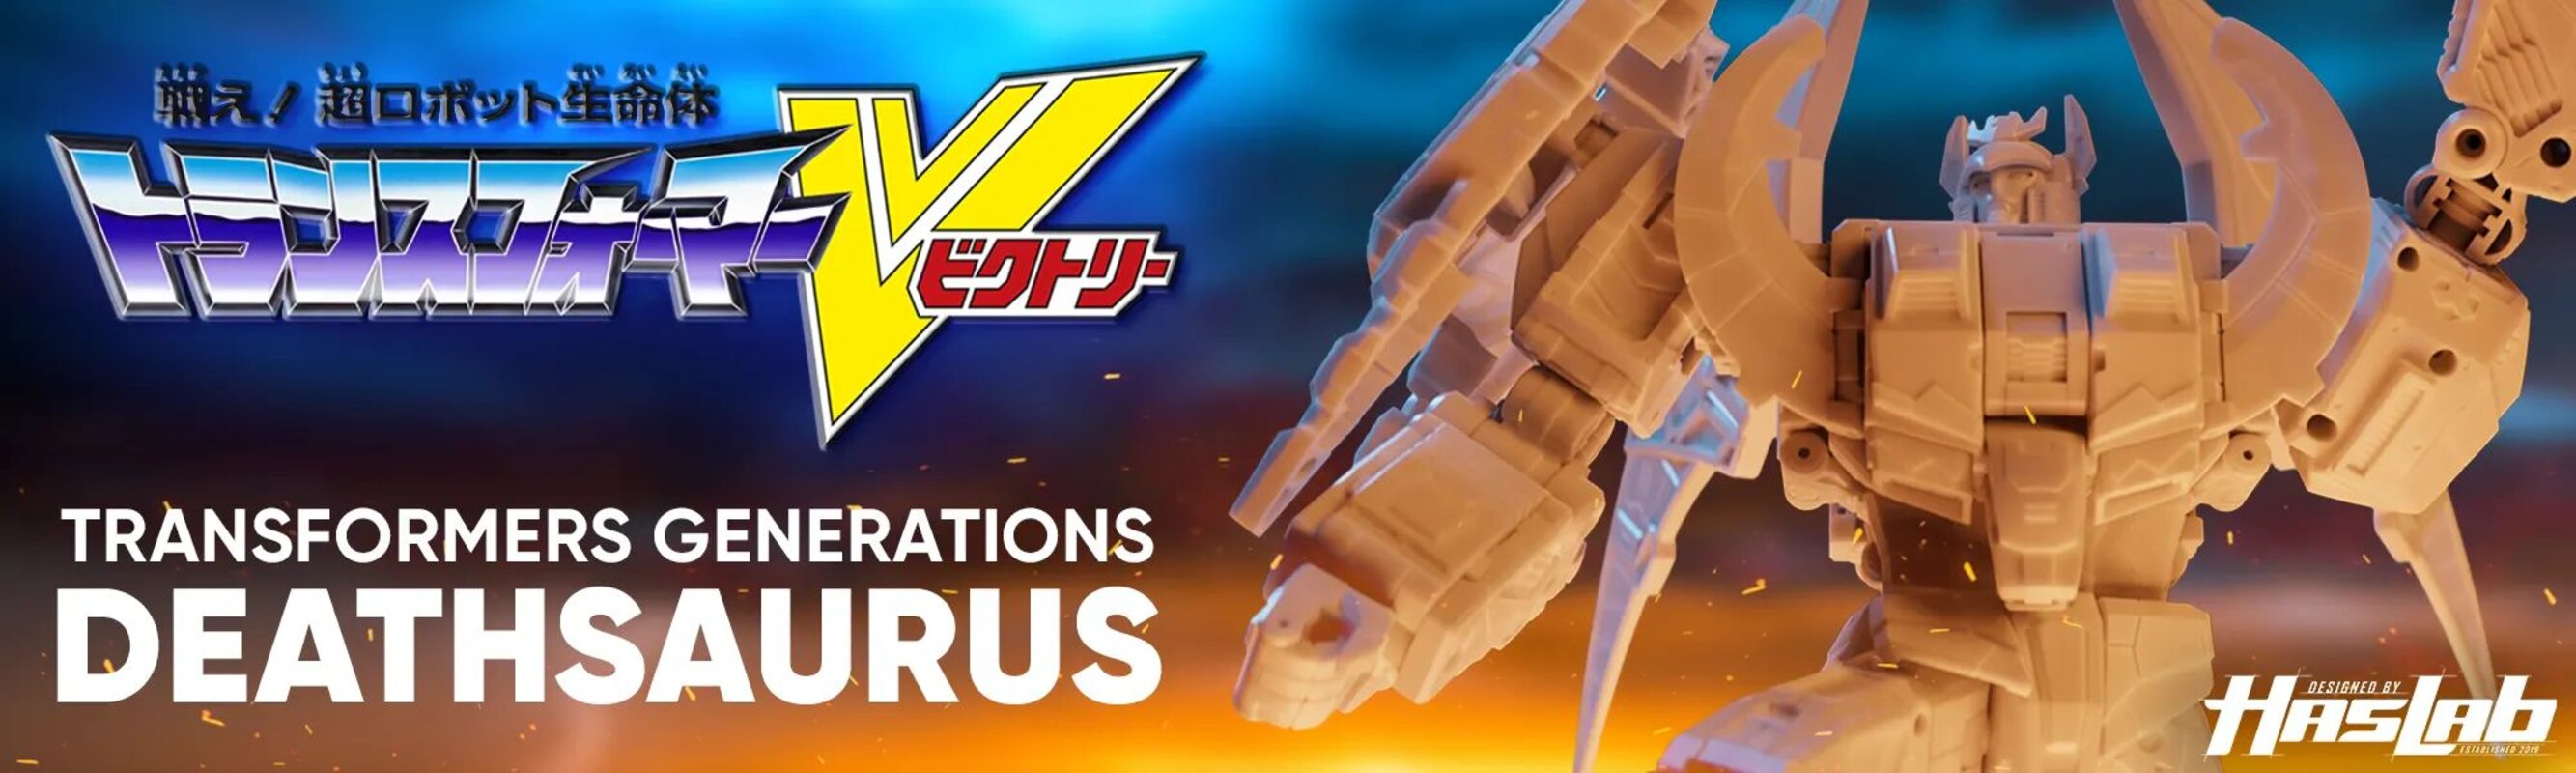 Transformers HasLab Victory Deathsaurus Invades Japan!